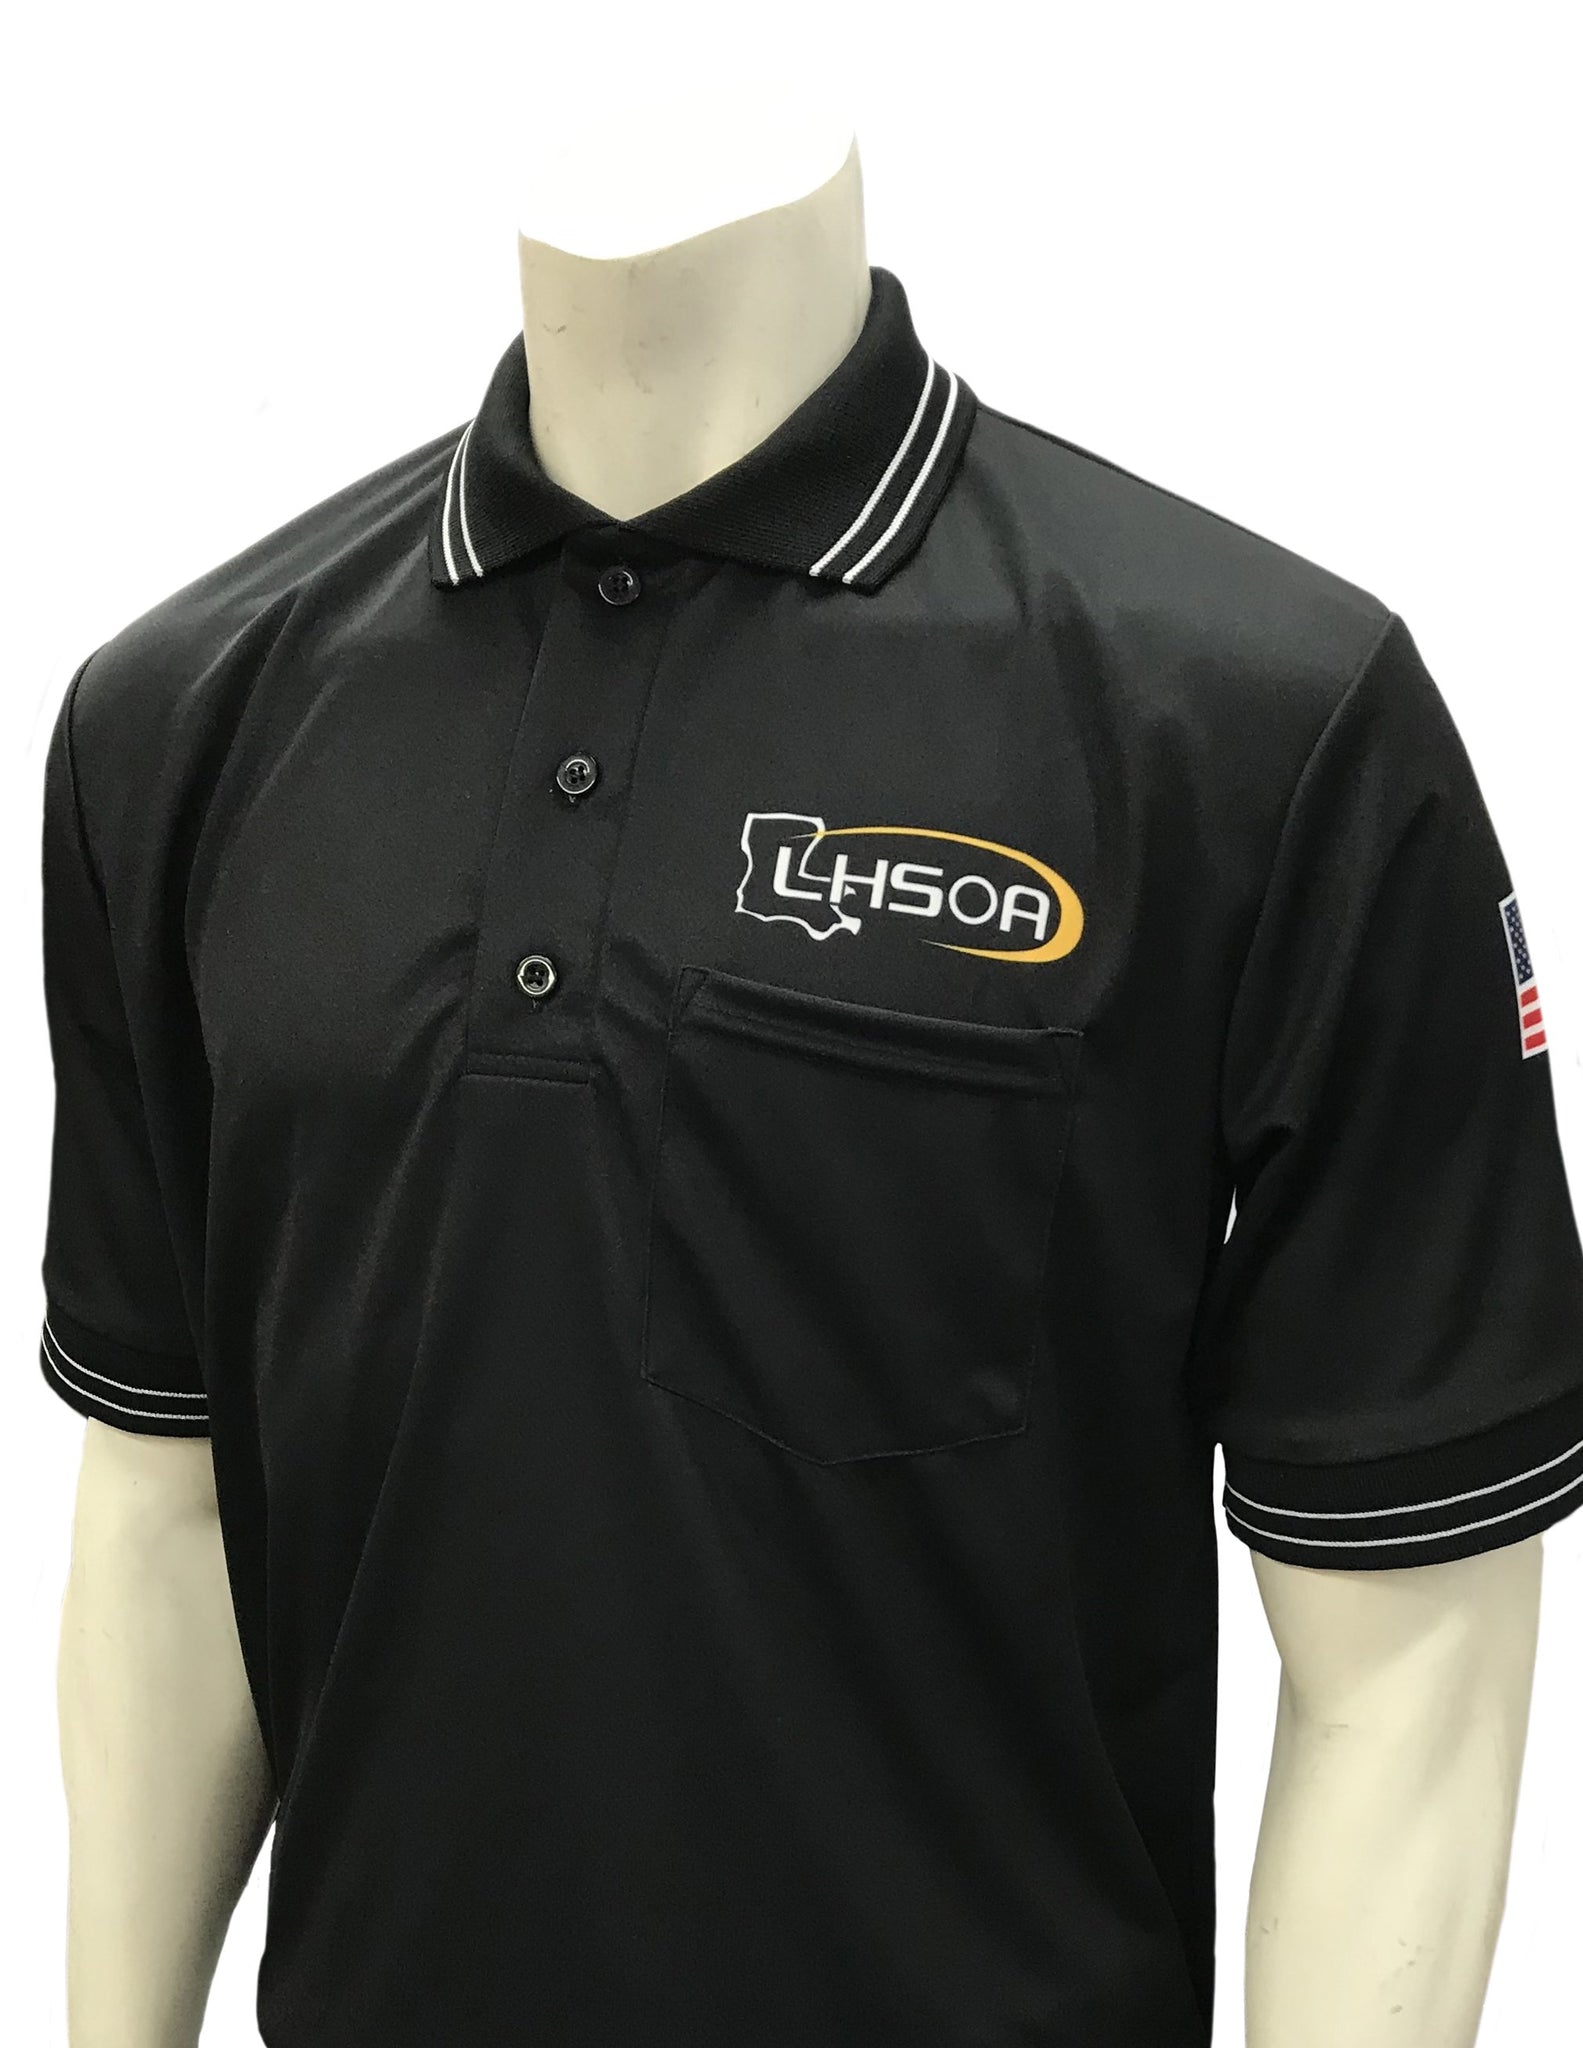 USA300LA - Smitty "Made in USA" - Short Sleeve Baseball Shirt Black